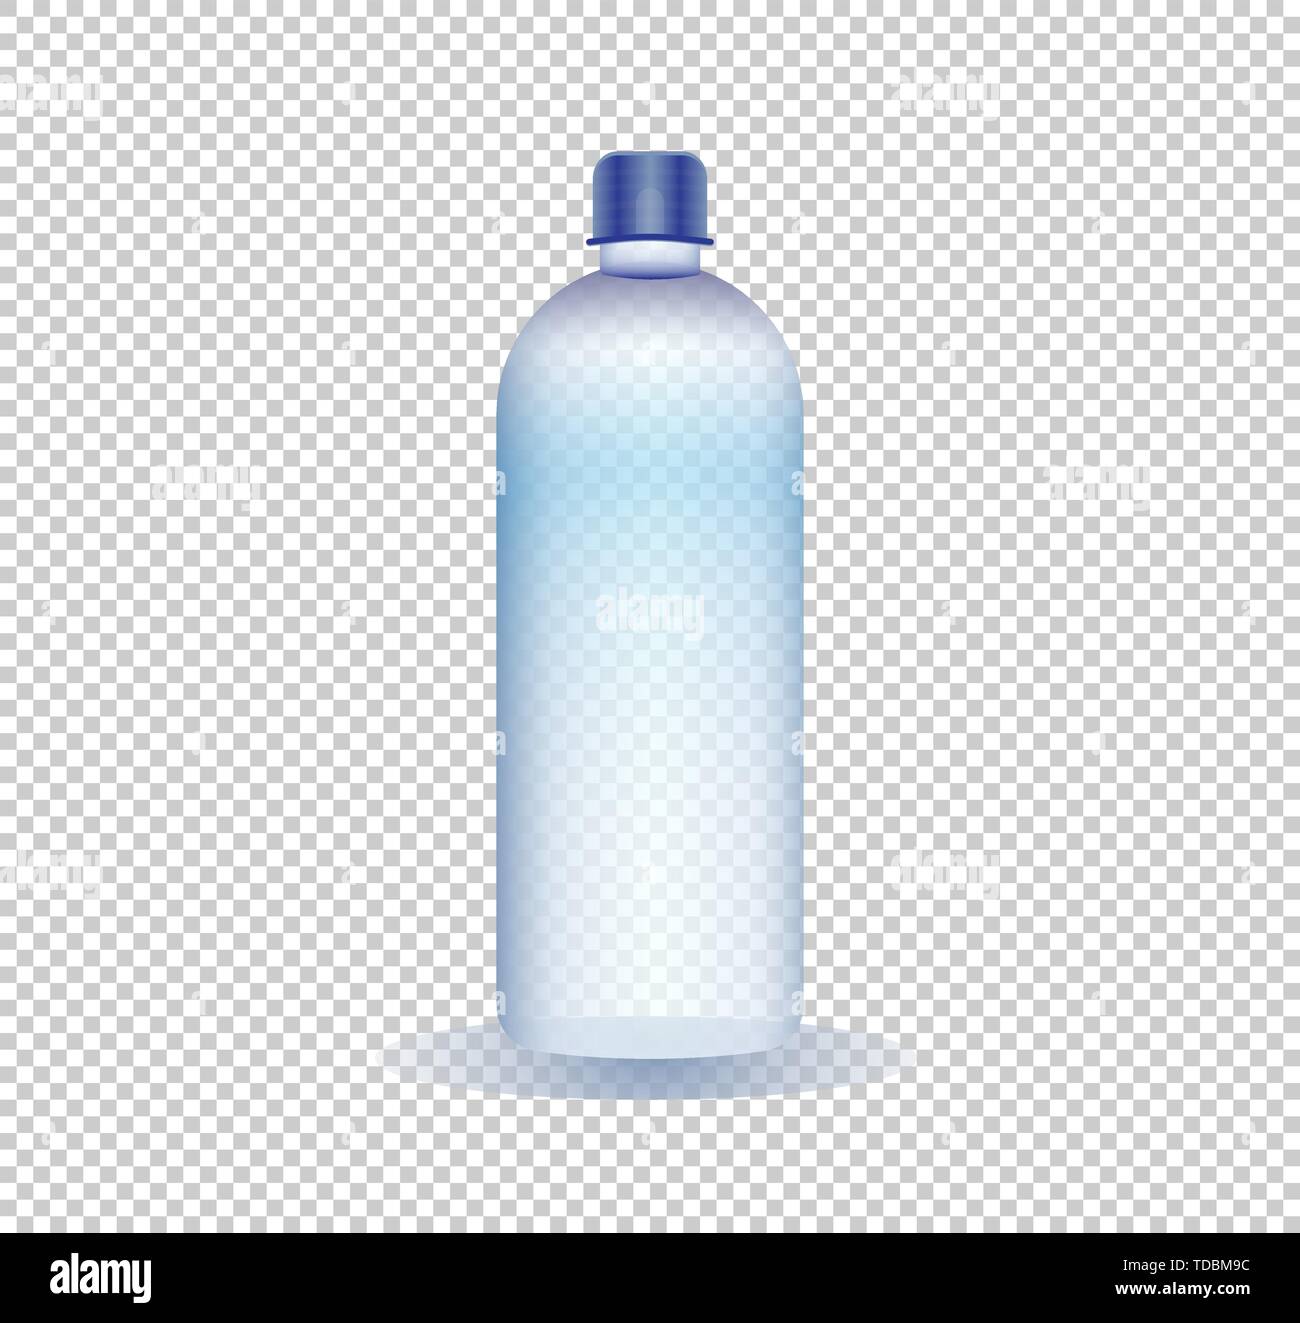 https://c8.alamy.com/comp/TDBM9C/vector-illustration-of-a-pure-water-bottle-on-a-transparent-background-TDBM9C.jpg